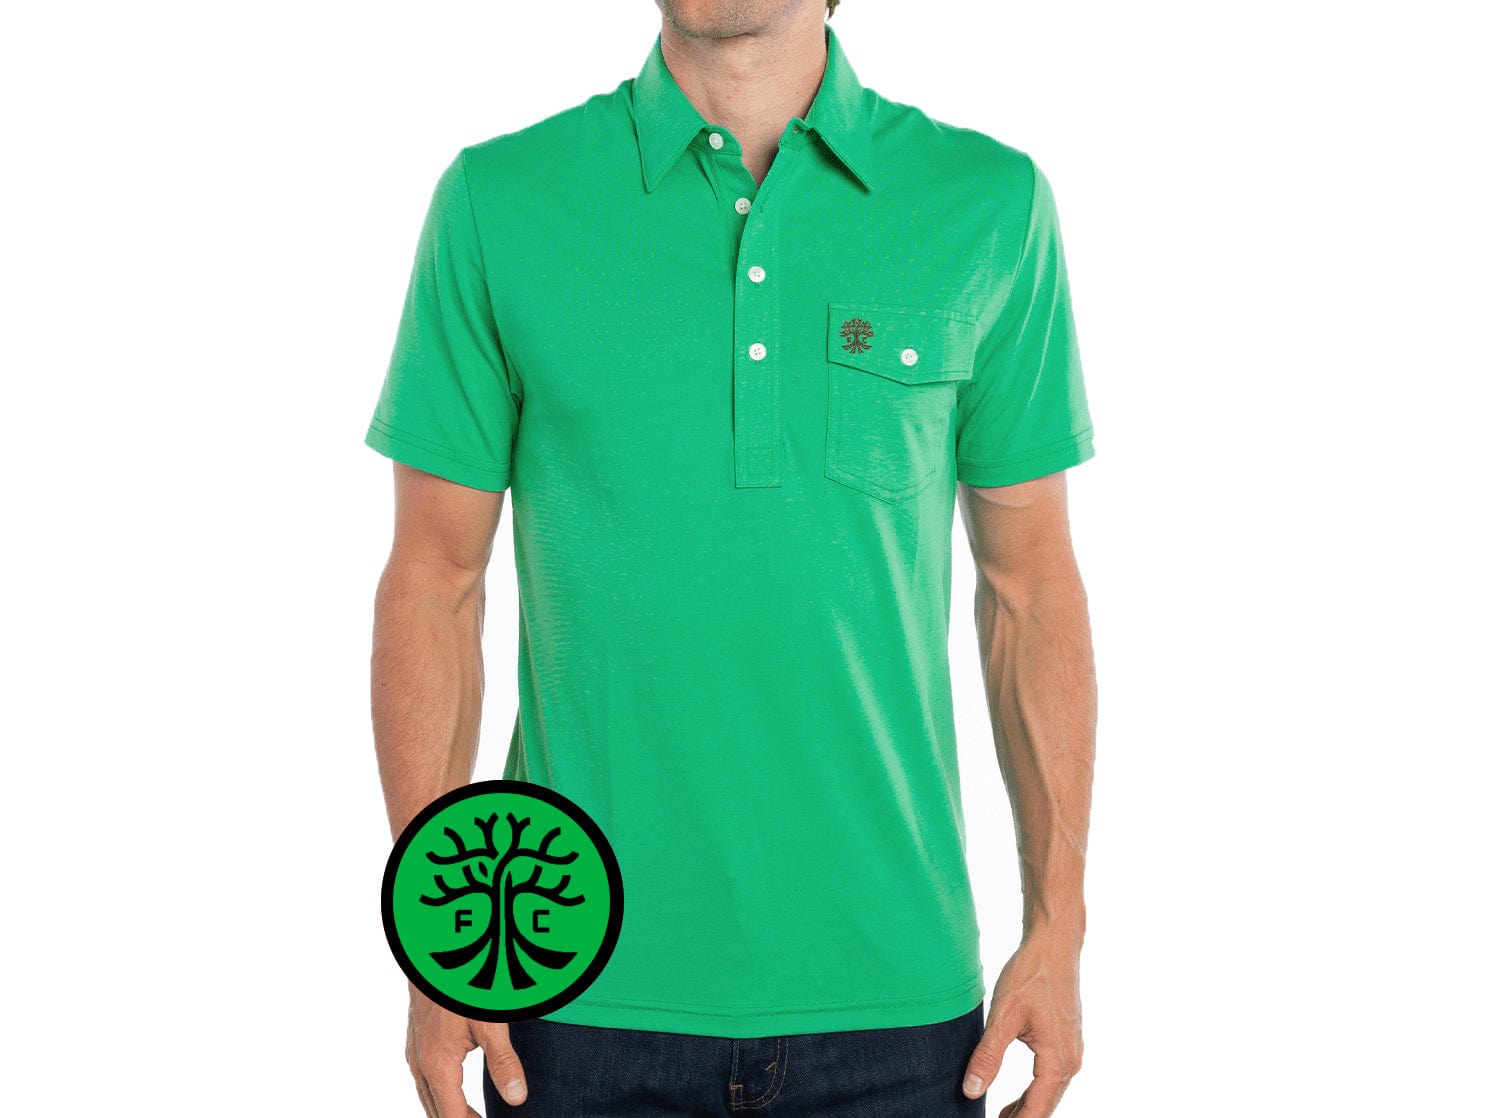 Austin FC - Performance Players Shirt - Tree - Verde